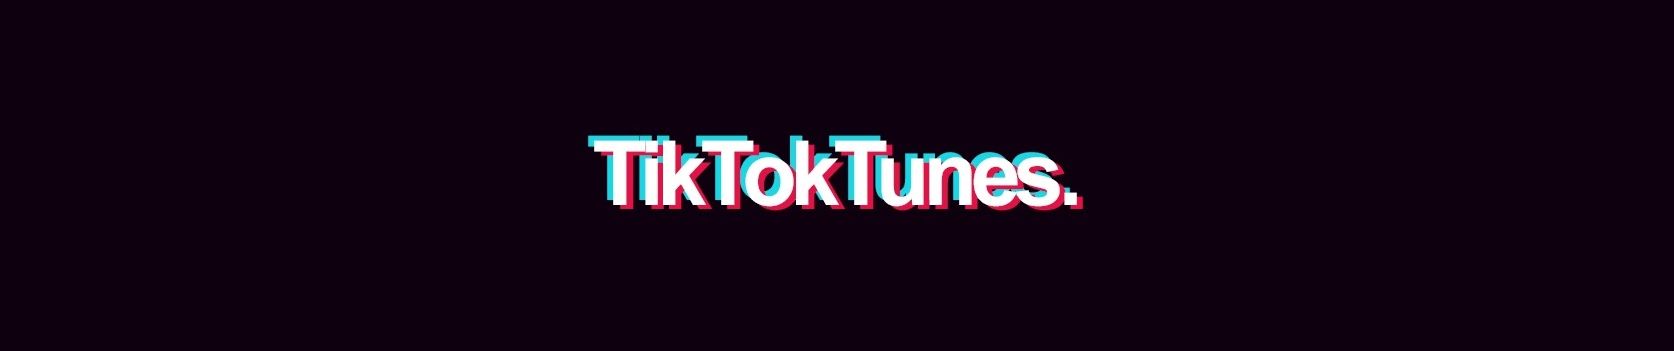 Reticências Official Tiktok Music  album by Inguz - Listening To All 6  Musics On Tiktok Music